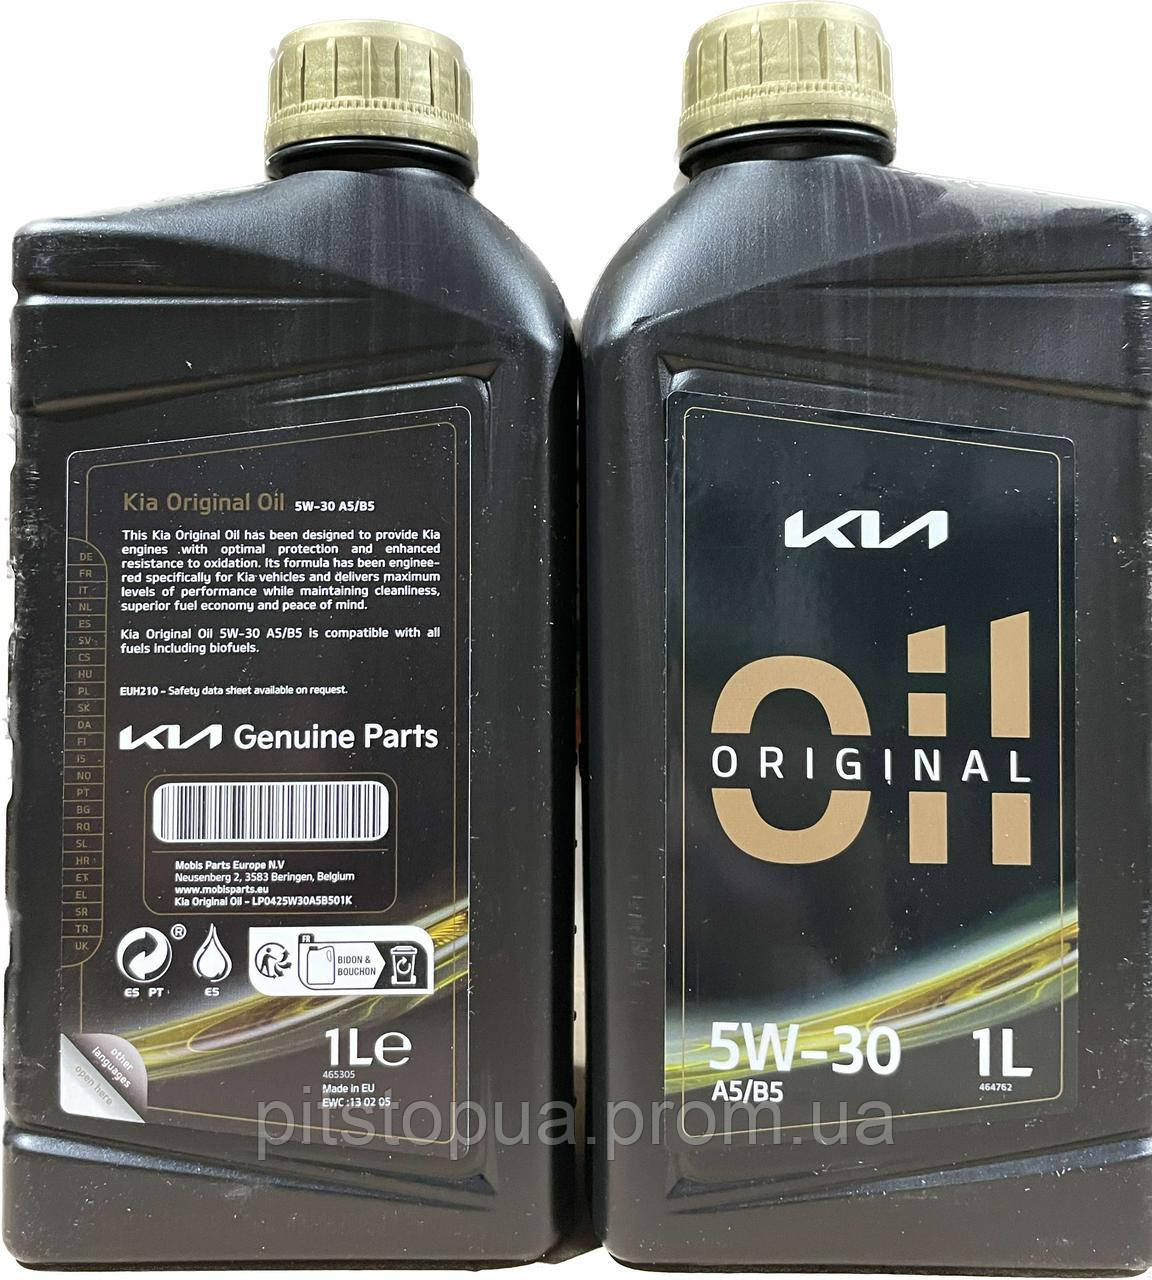 KiKia Original Oil 5W-30 A5/B5, 214355, 1 л.